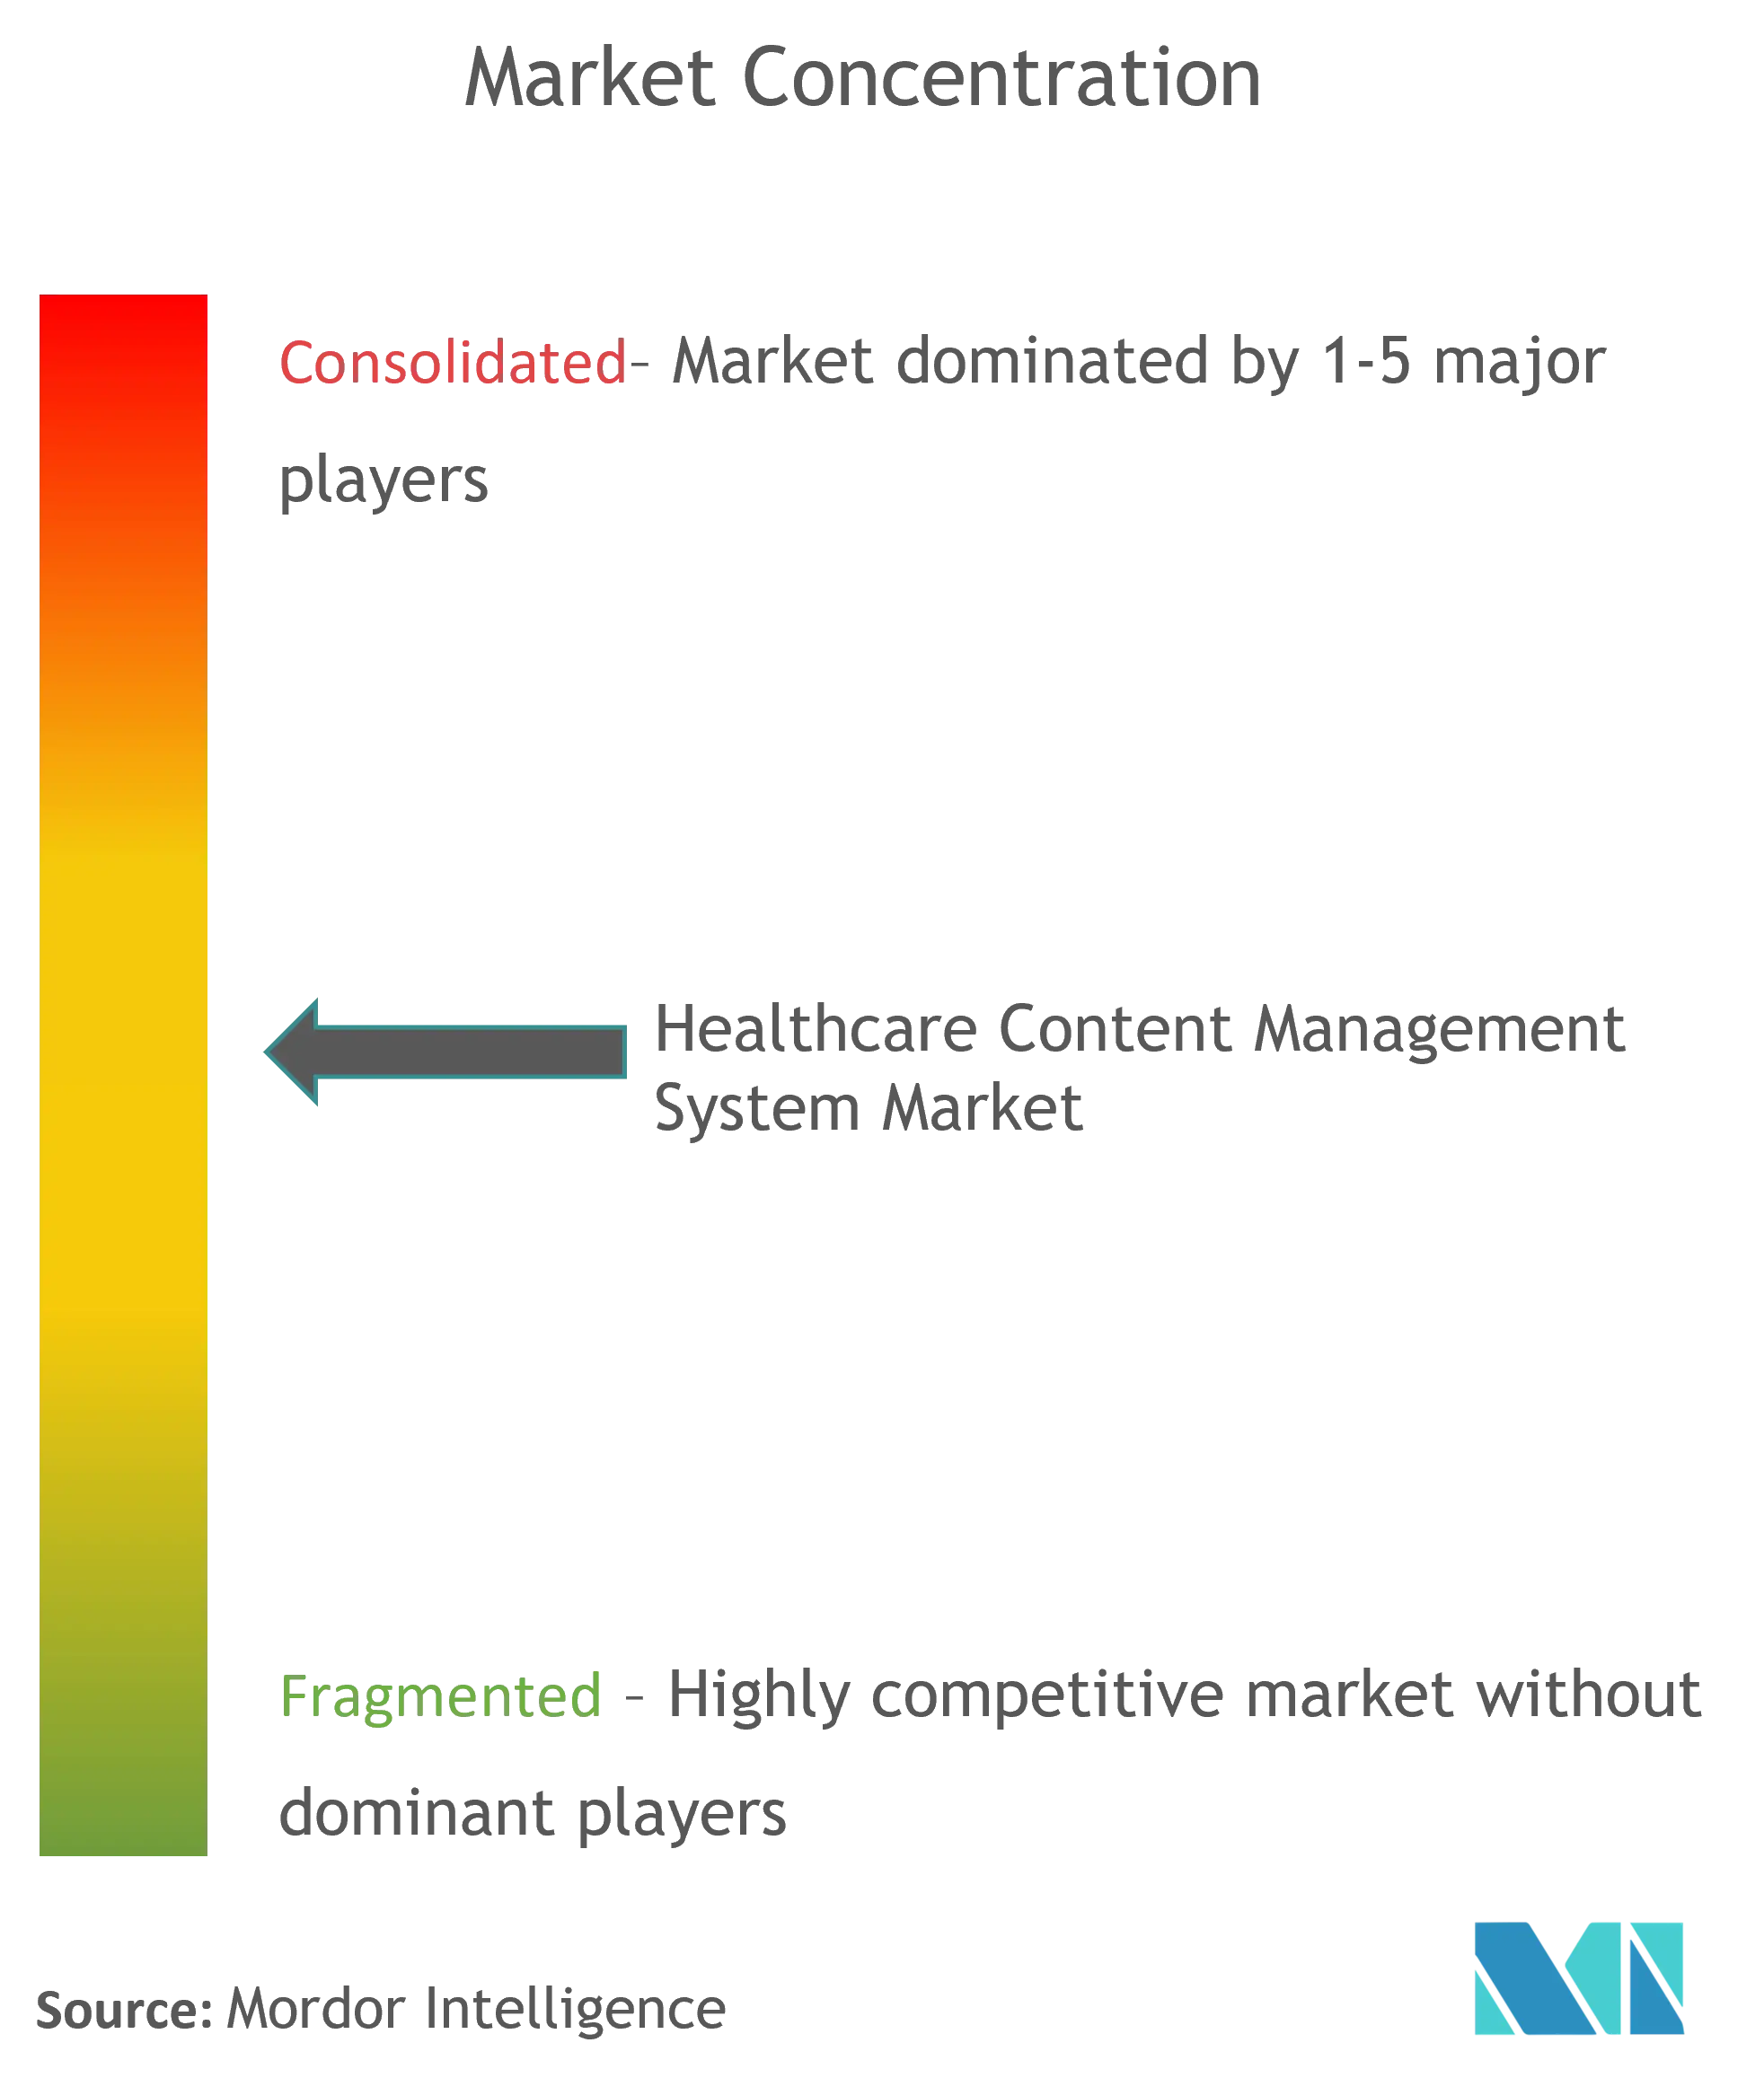 Global Healthcare Content Management System Market Concentration